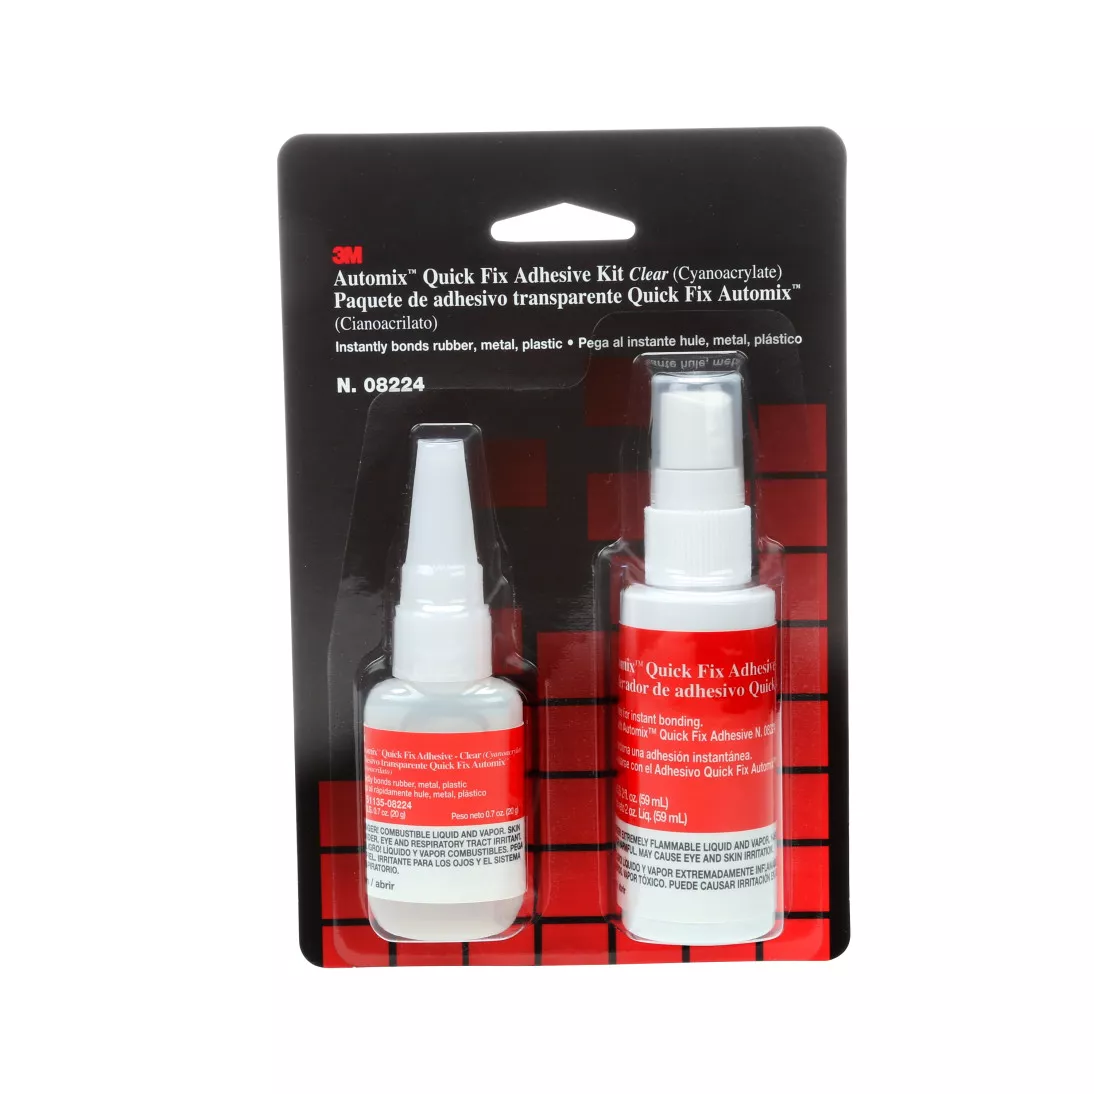 3M™ Quick Fix Adhesive Kit, 08224, 0.7 oz adhesive/2.0 oz accelerator
Bottles, 6 per case